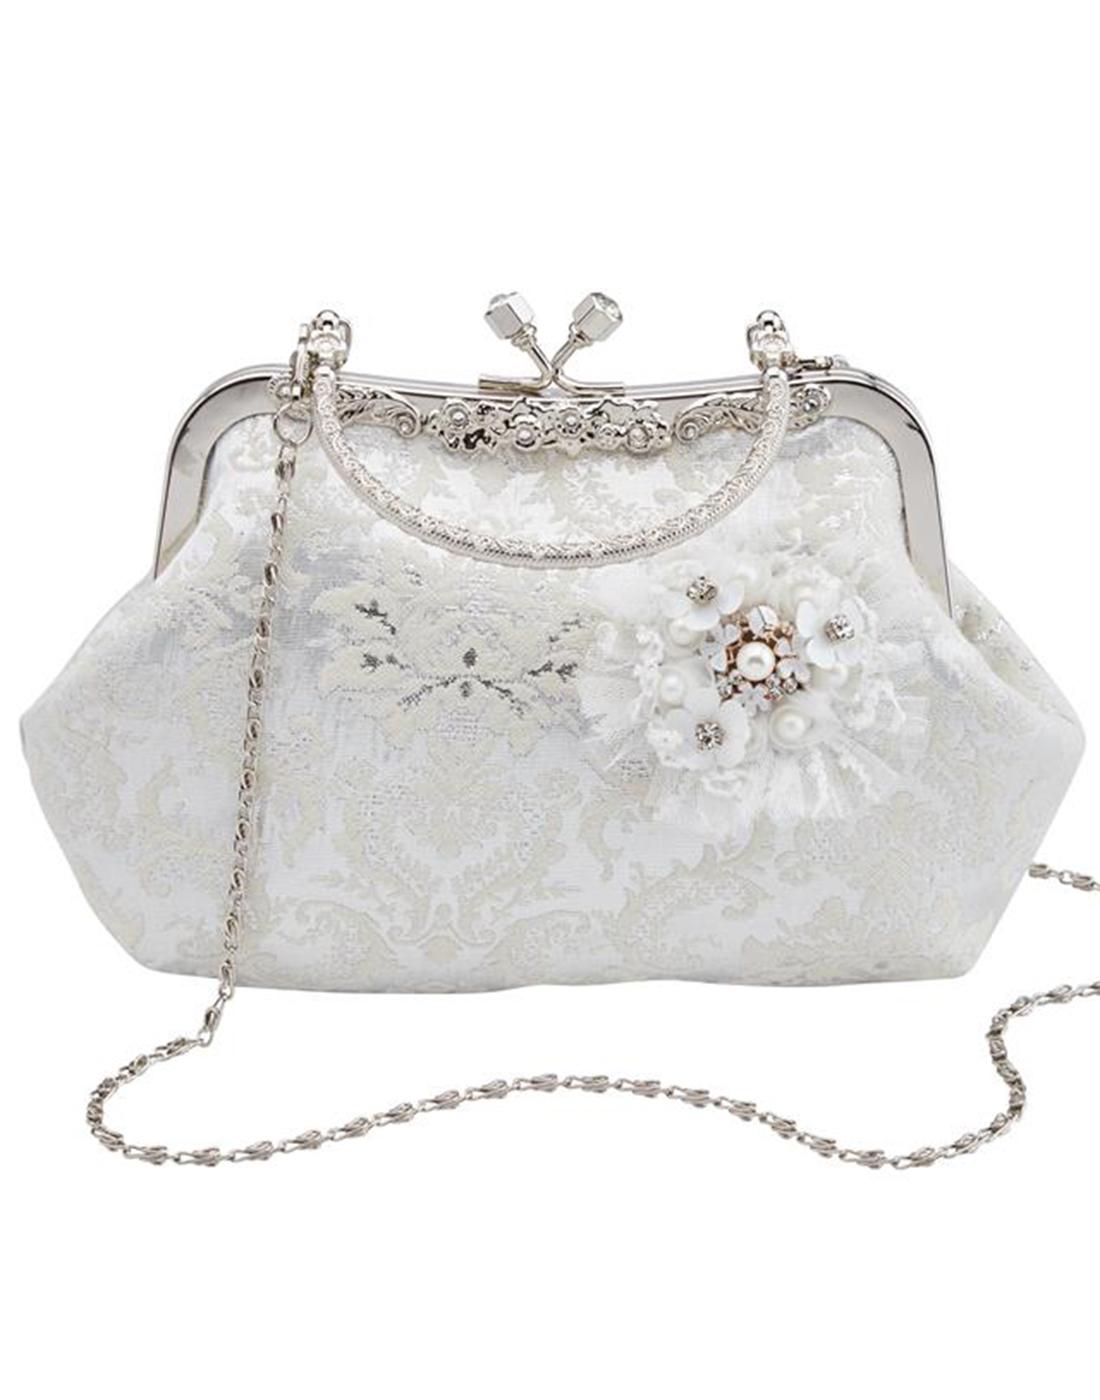 Hitched JOE BROWNS Bridal Vintage Handbag- Ivory